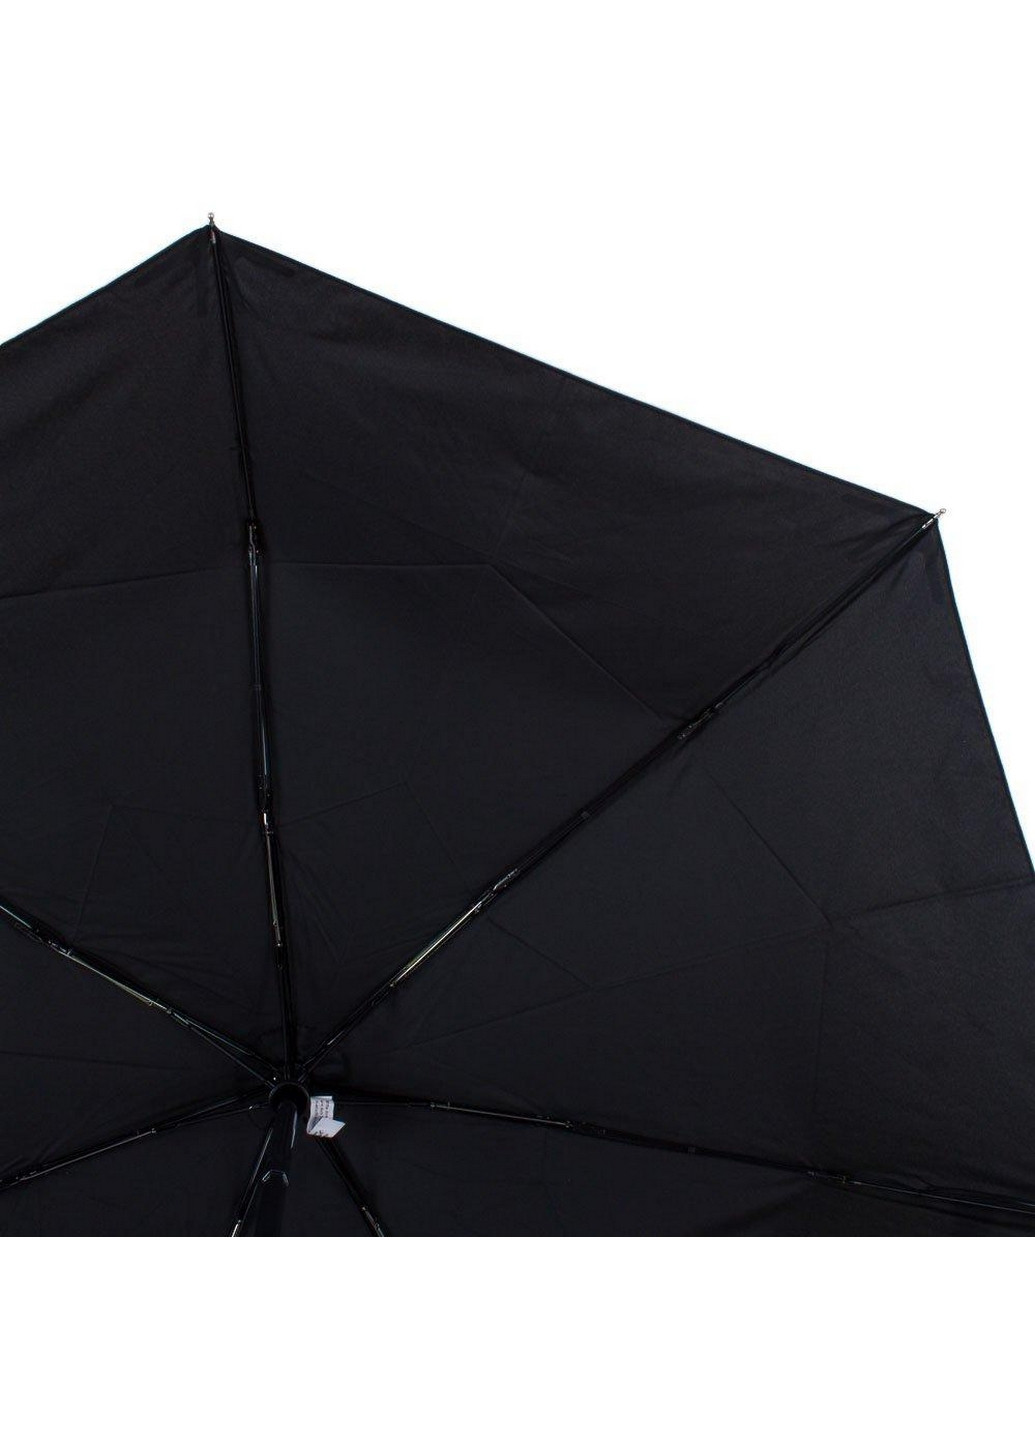 Складной мужской зонт автомат 96 см FARE (260285530)